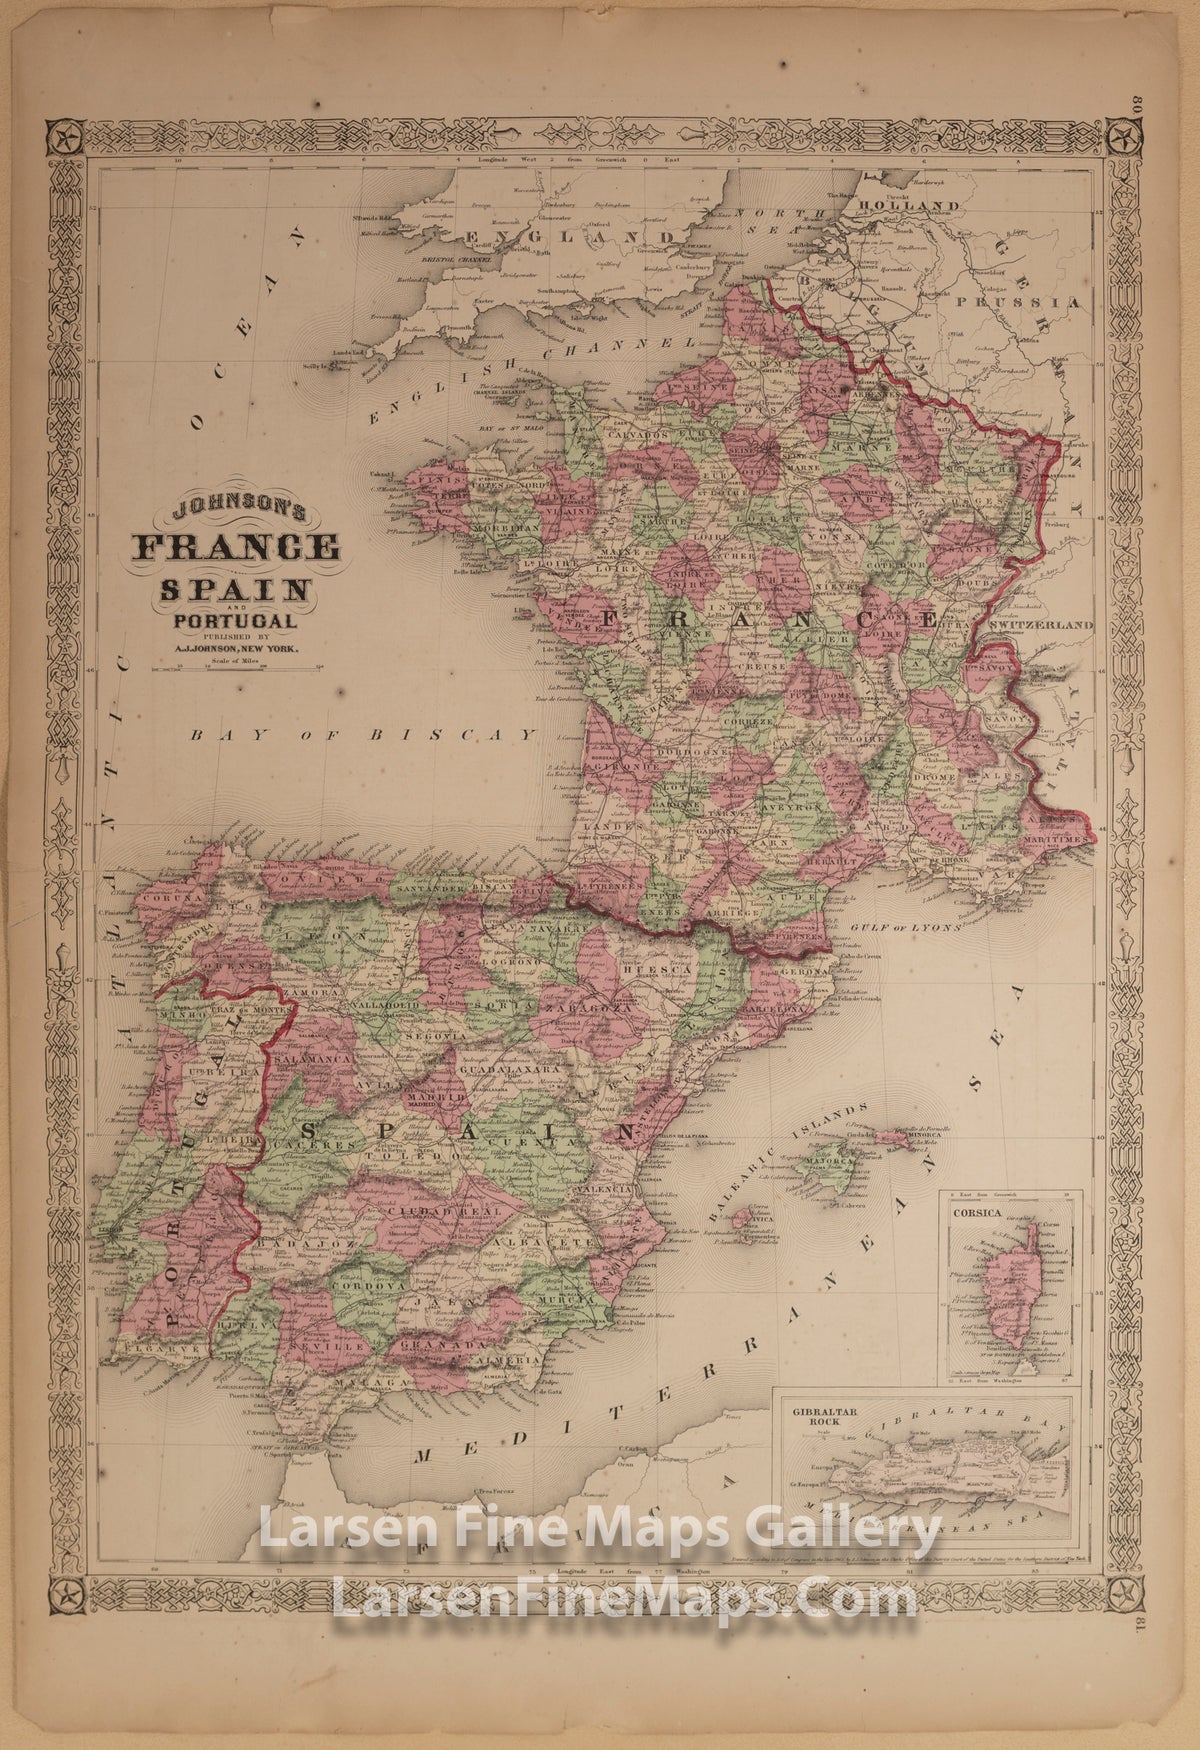 Johnson's France, Spain & Portugal